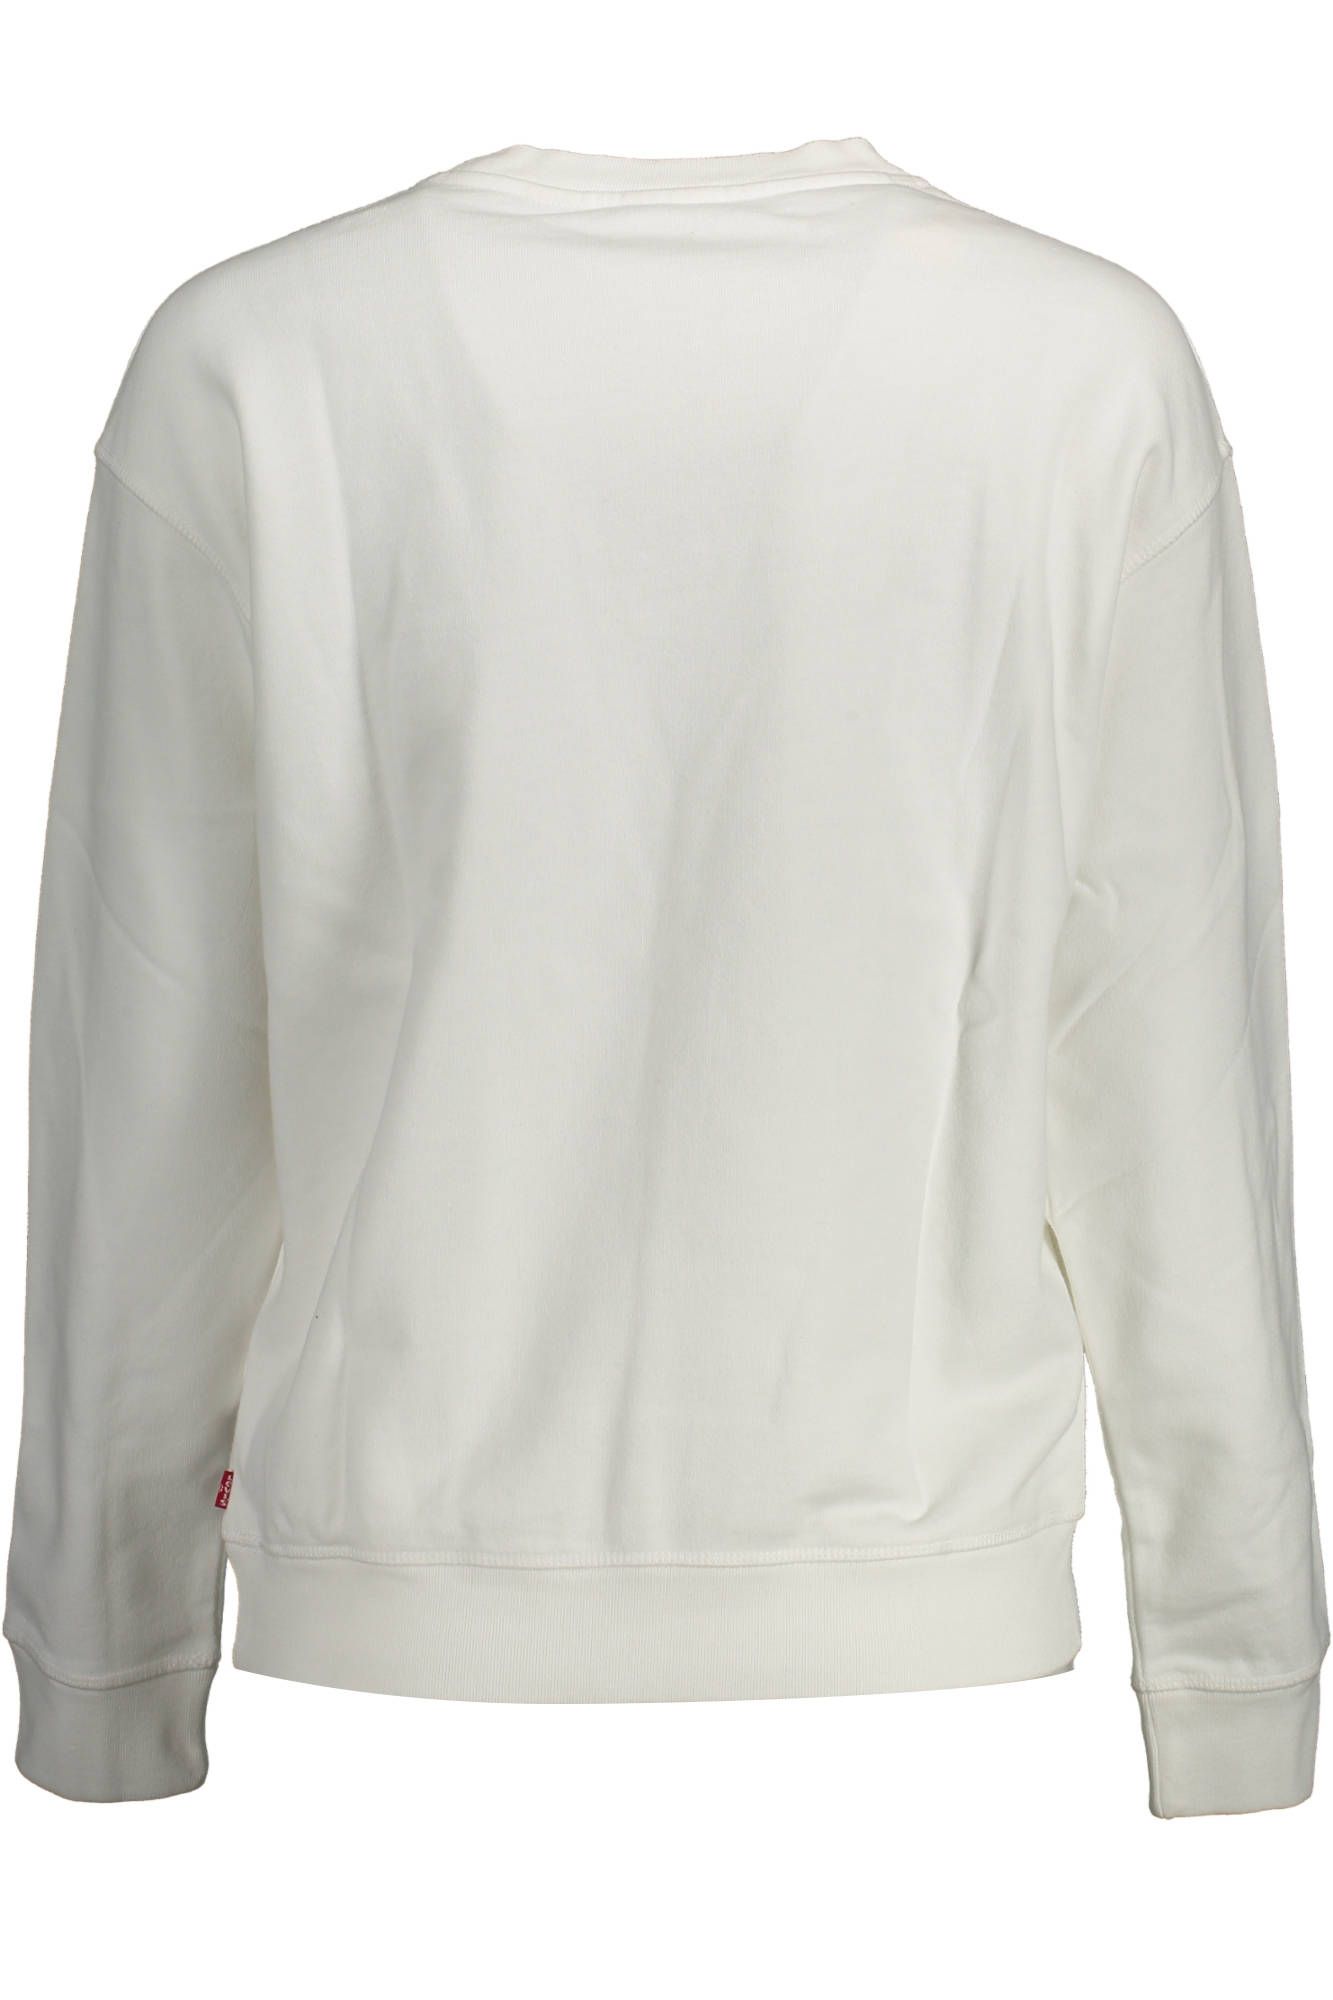 Levi's Chic White Cotton Logo Sweatshirt